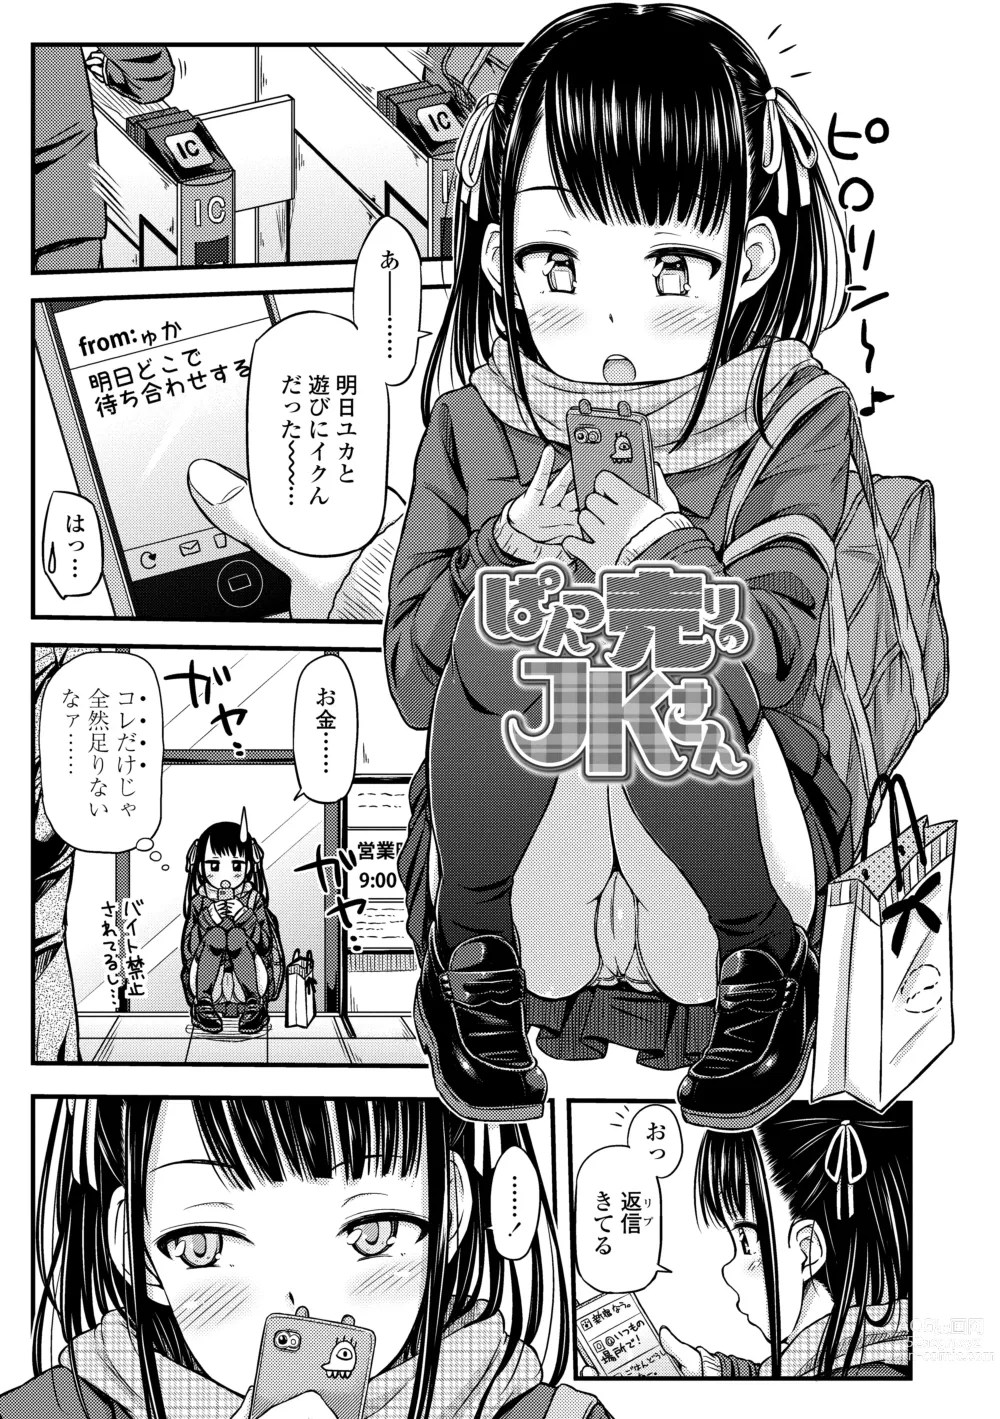 Page 5 of manga JK no Katachi